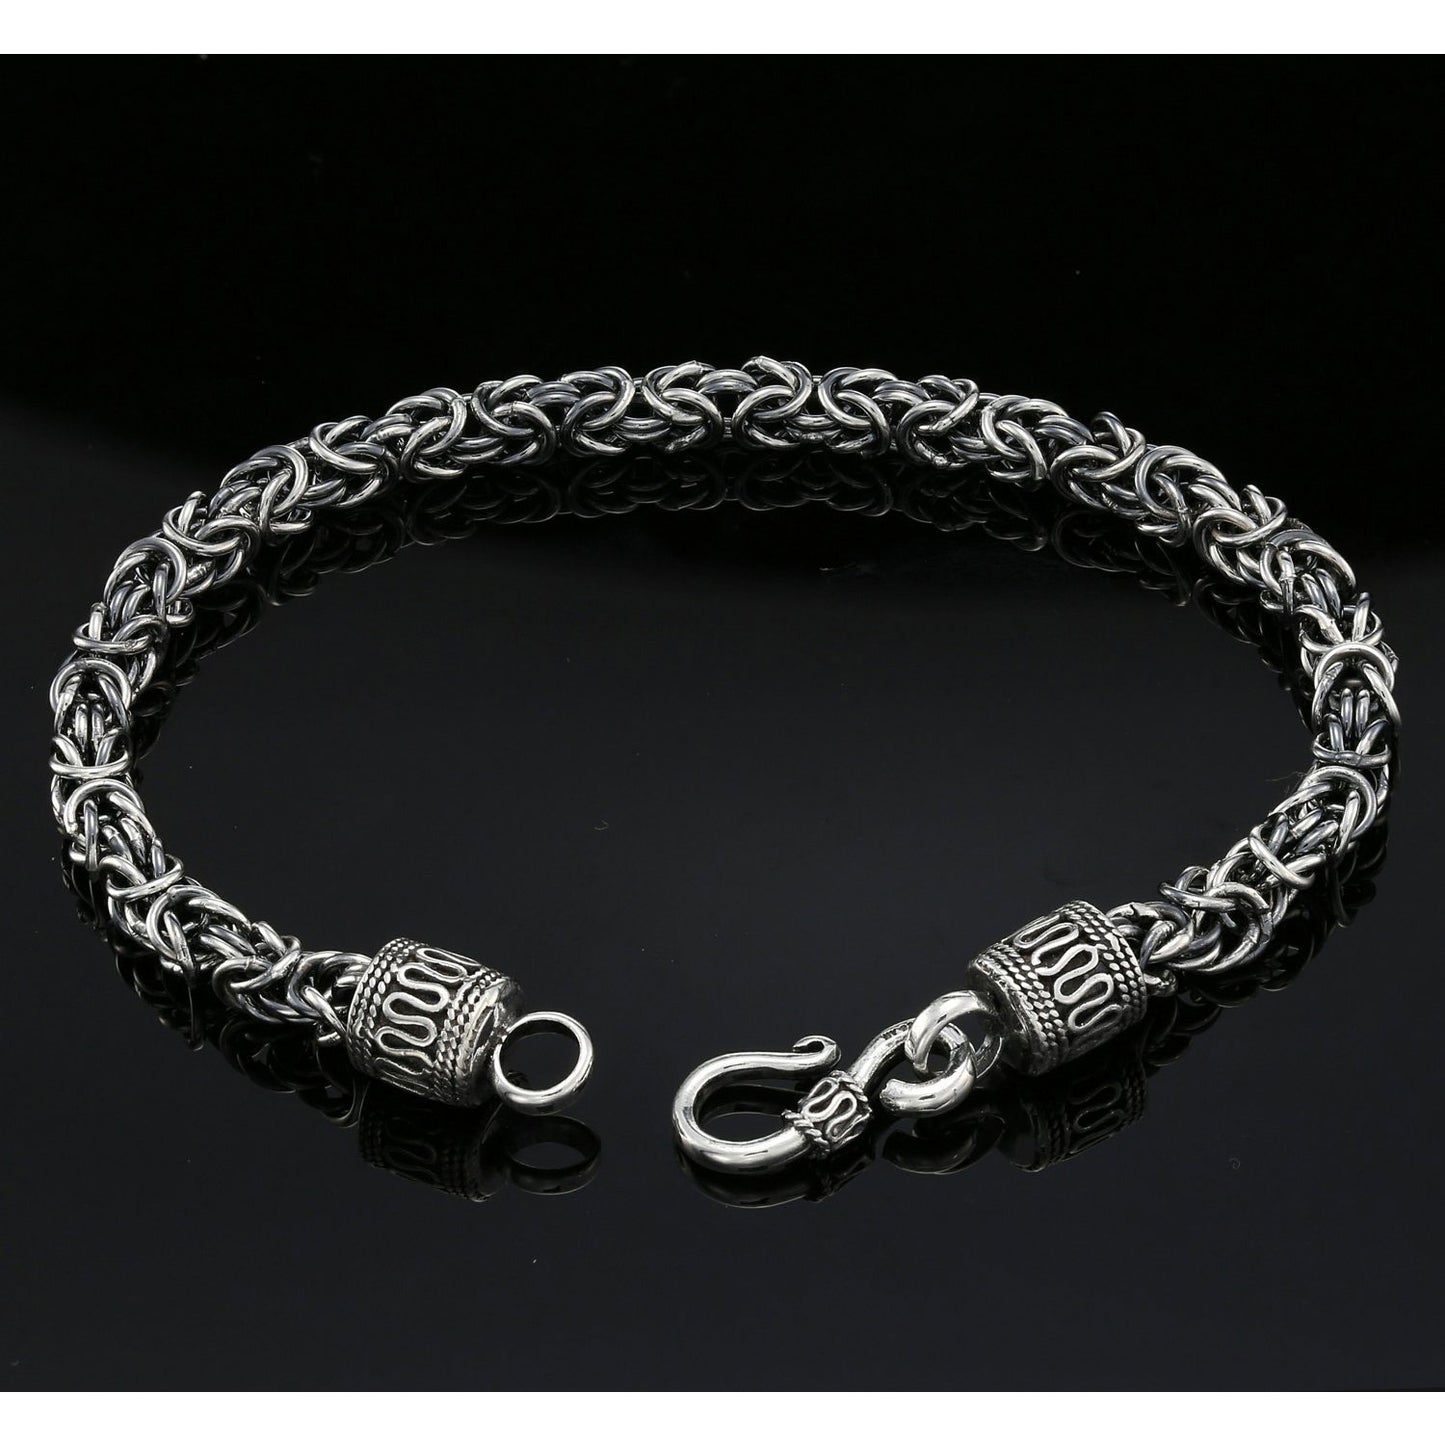 Dark Sterling Silver Handmade Byzantine Chain Bracelet with S-Hook Clasp. Unisex